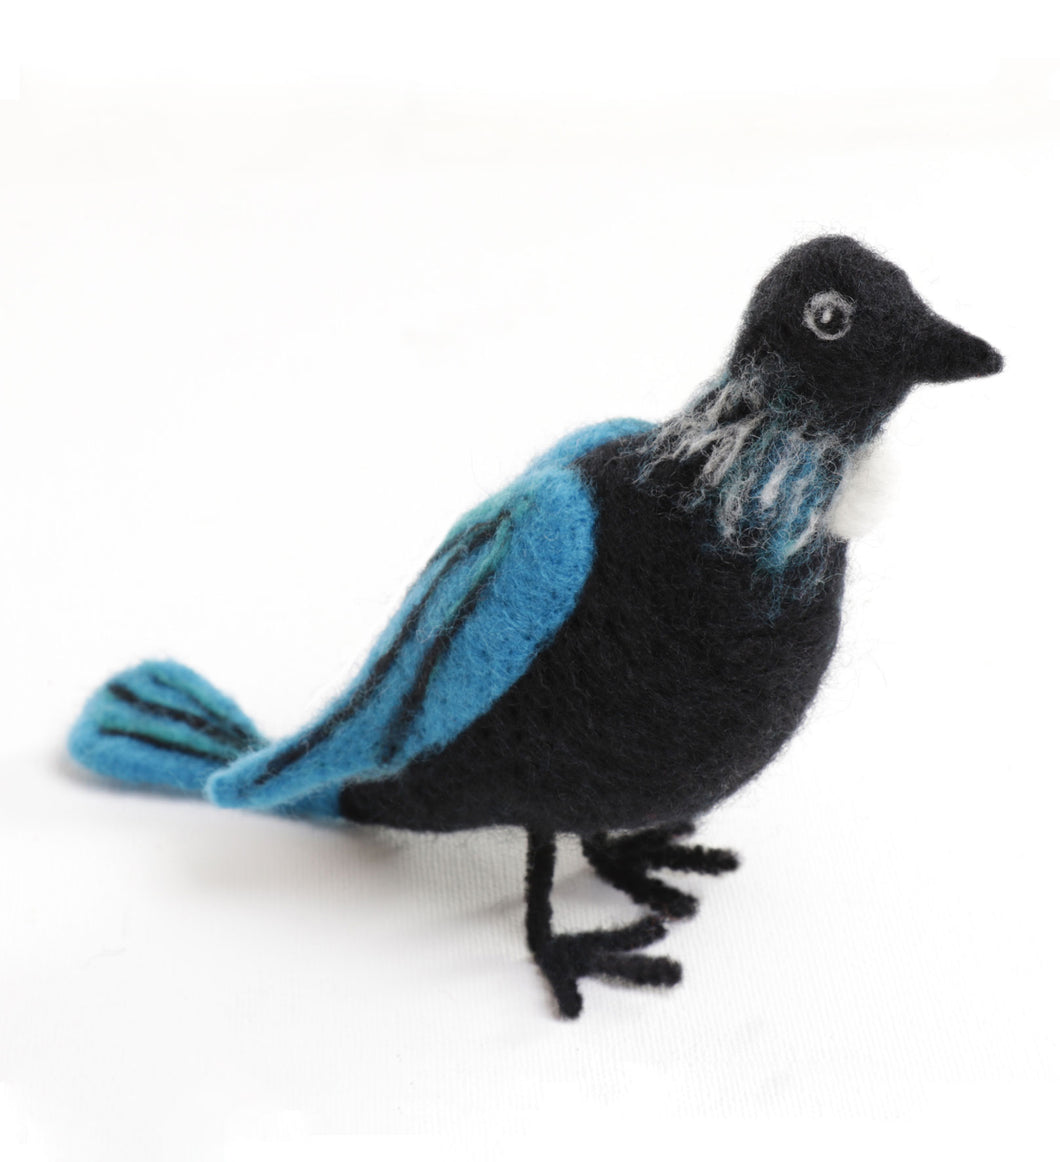 Tui (Bird) Needle Felting Kit by Ashford